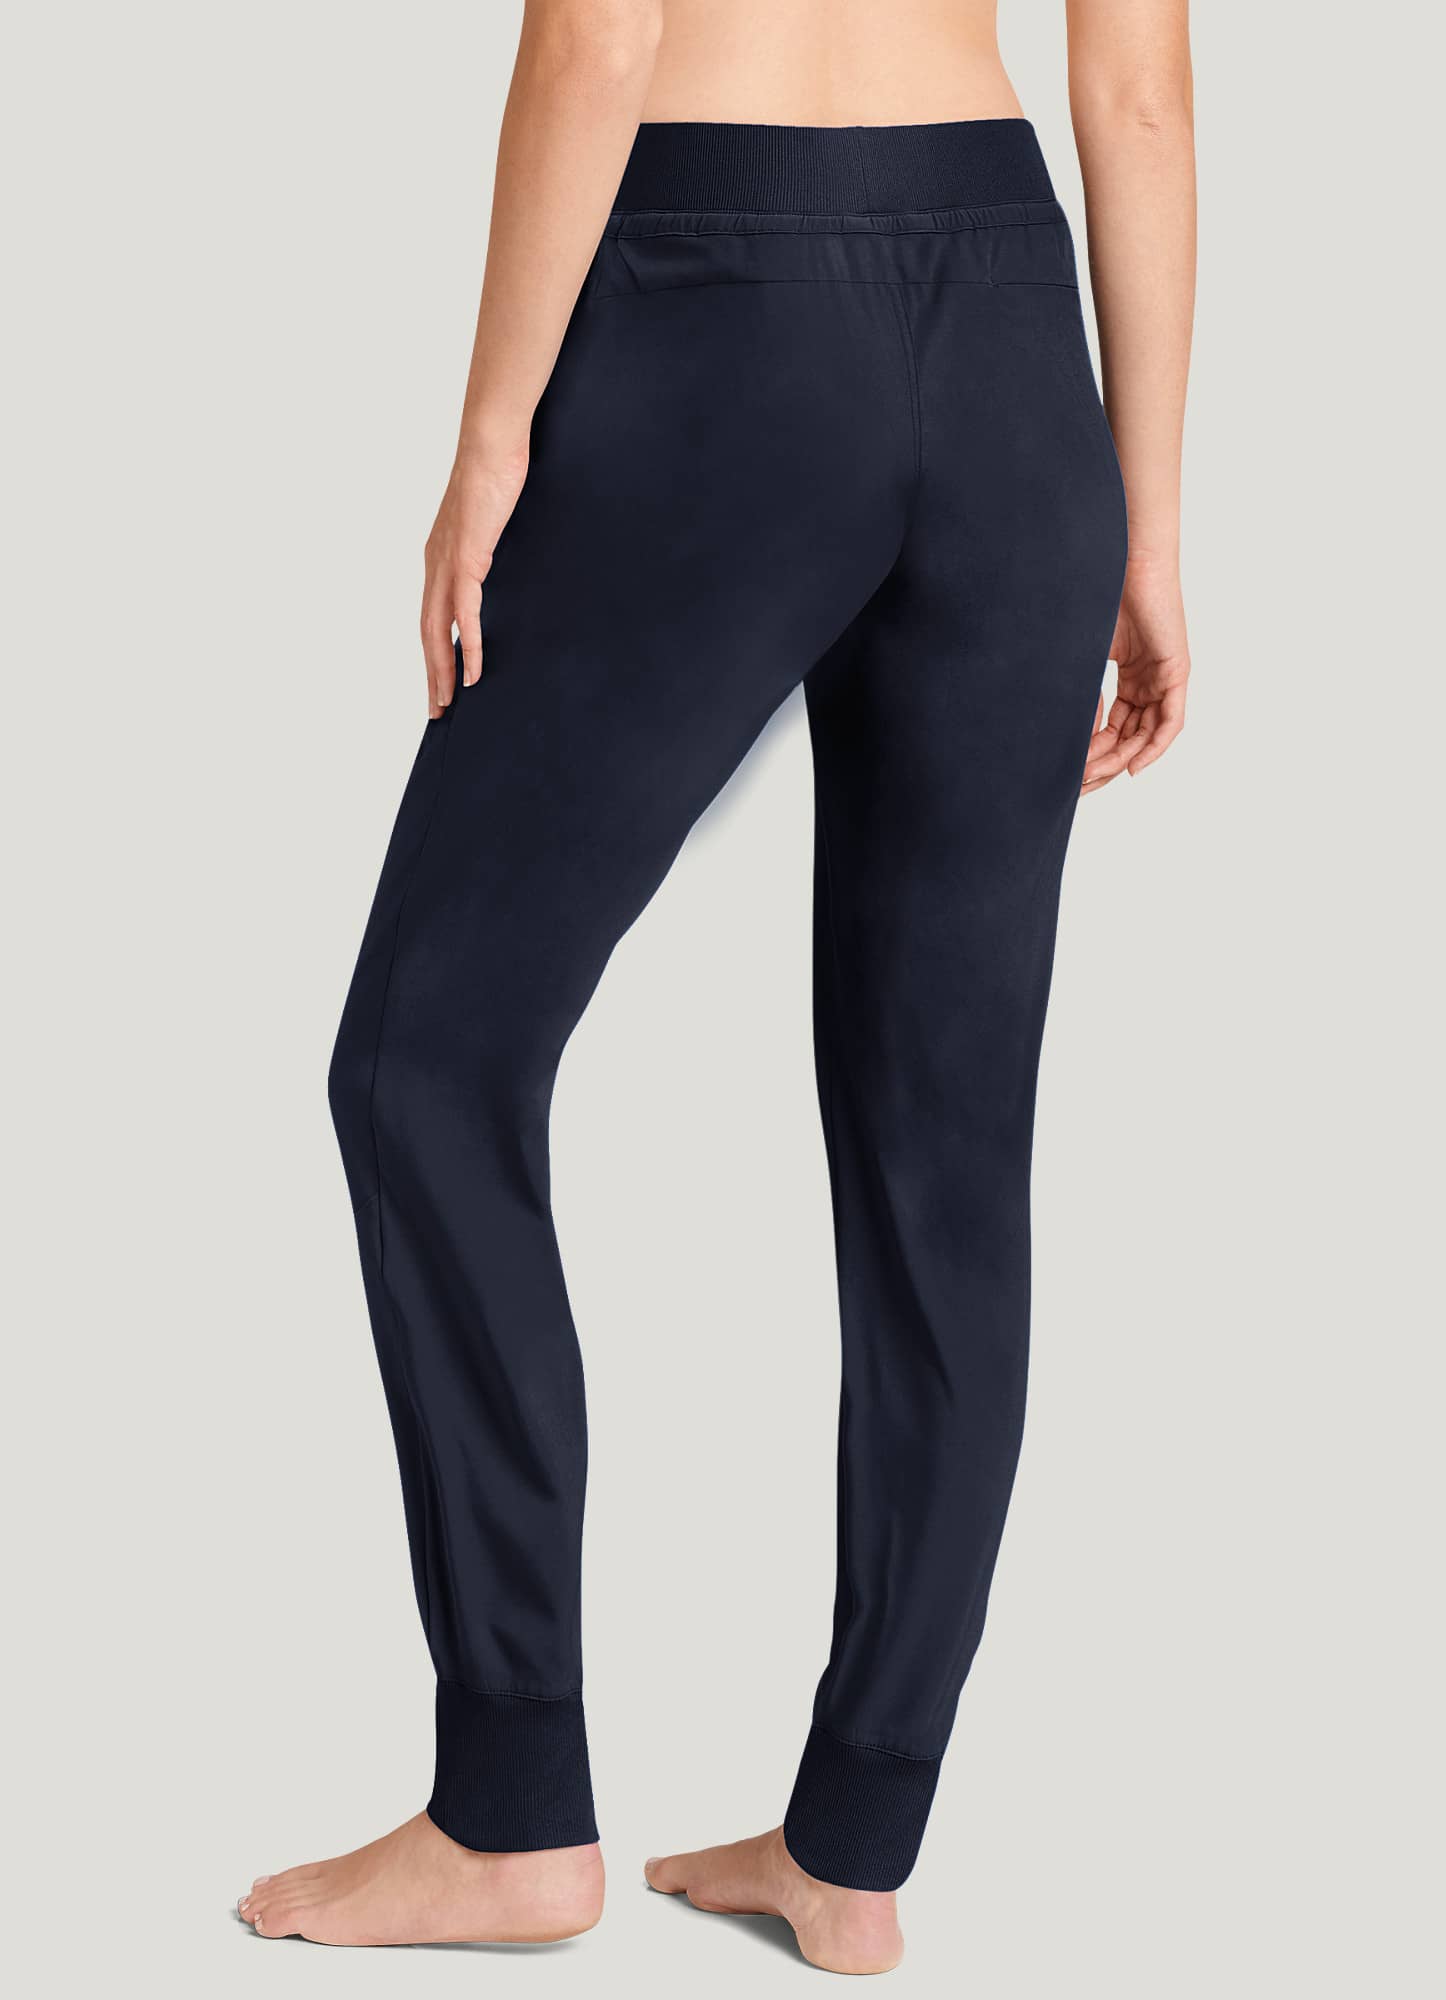 Jockey Women's Regular Fit Cotton Track Pants (1301_Lt Grey